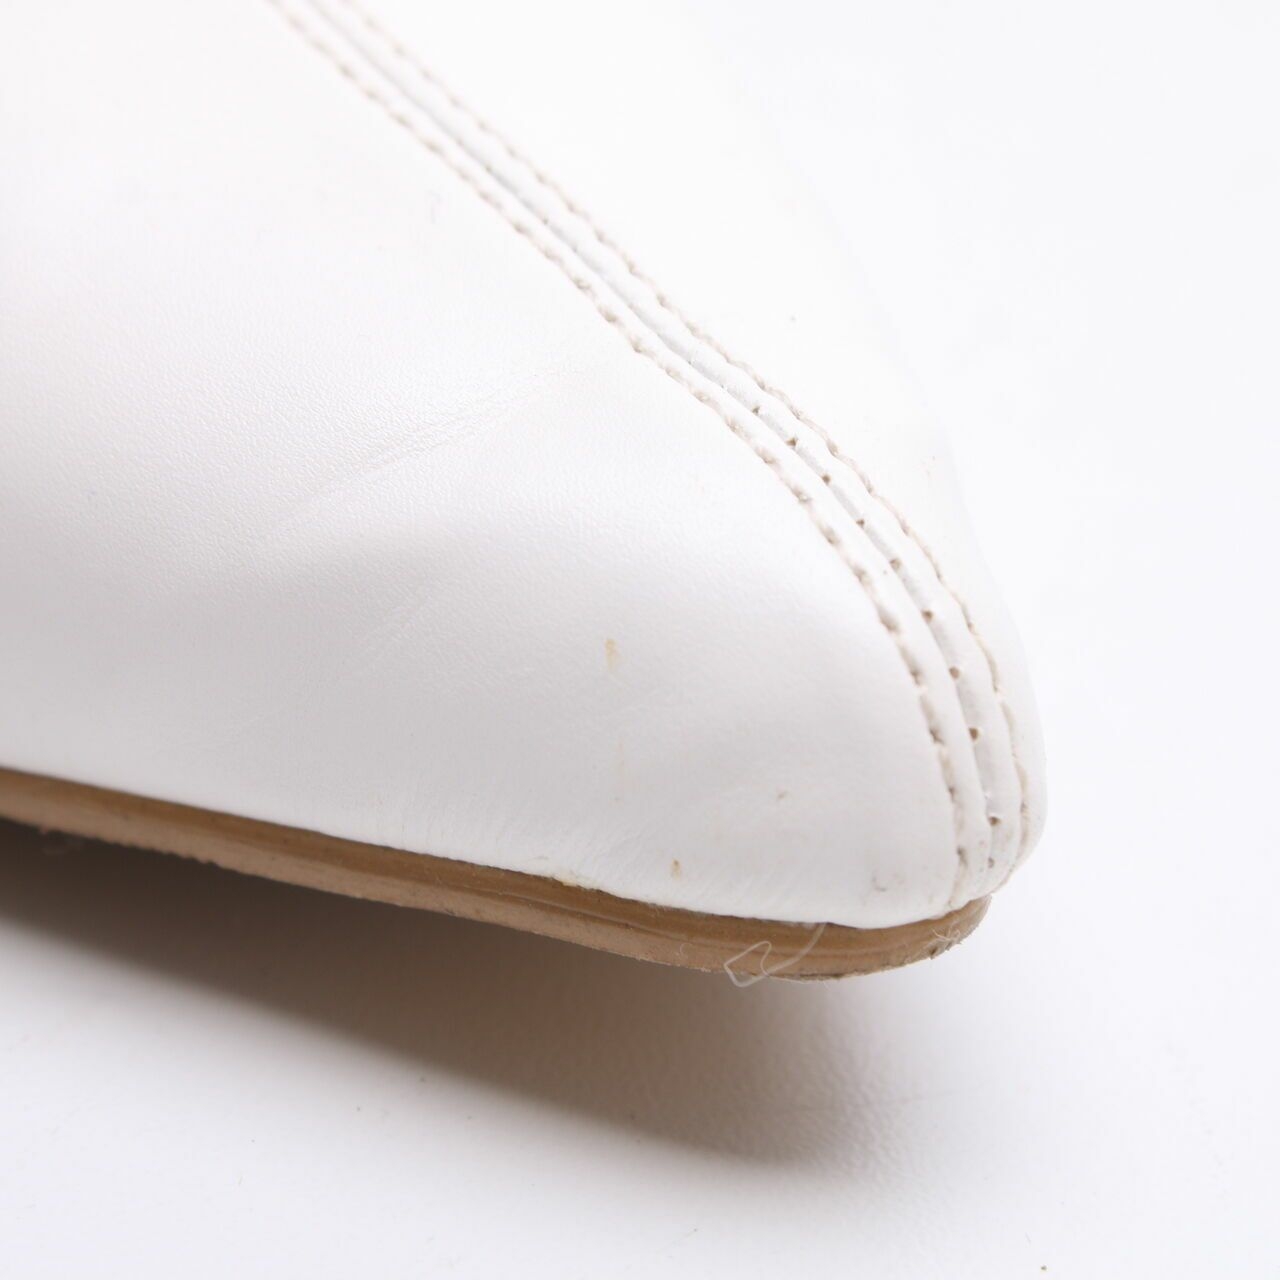 PIX White Slingback Sandals